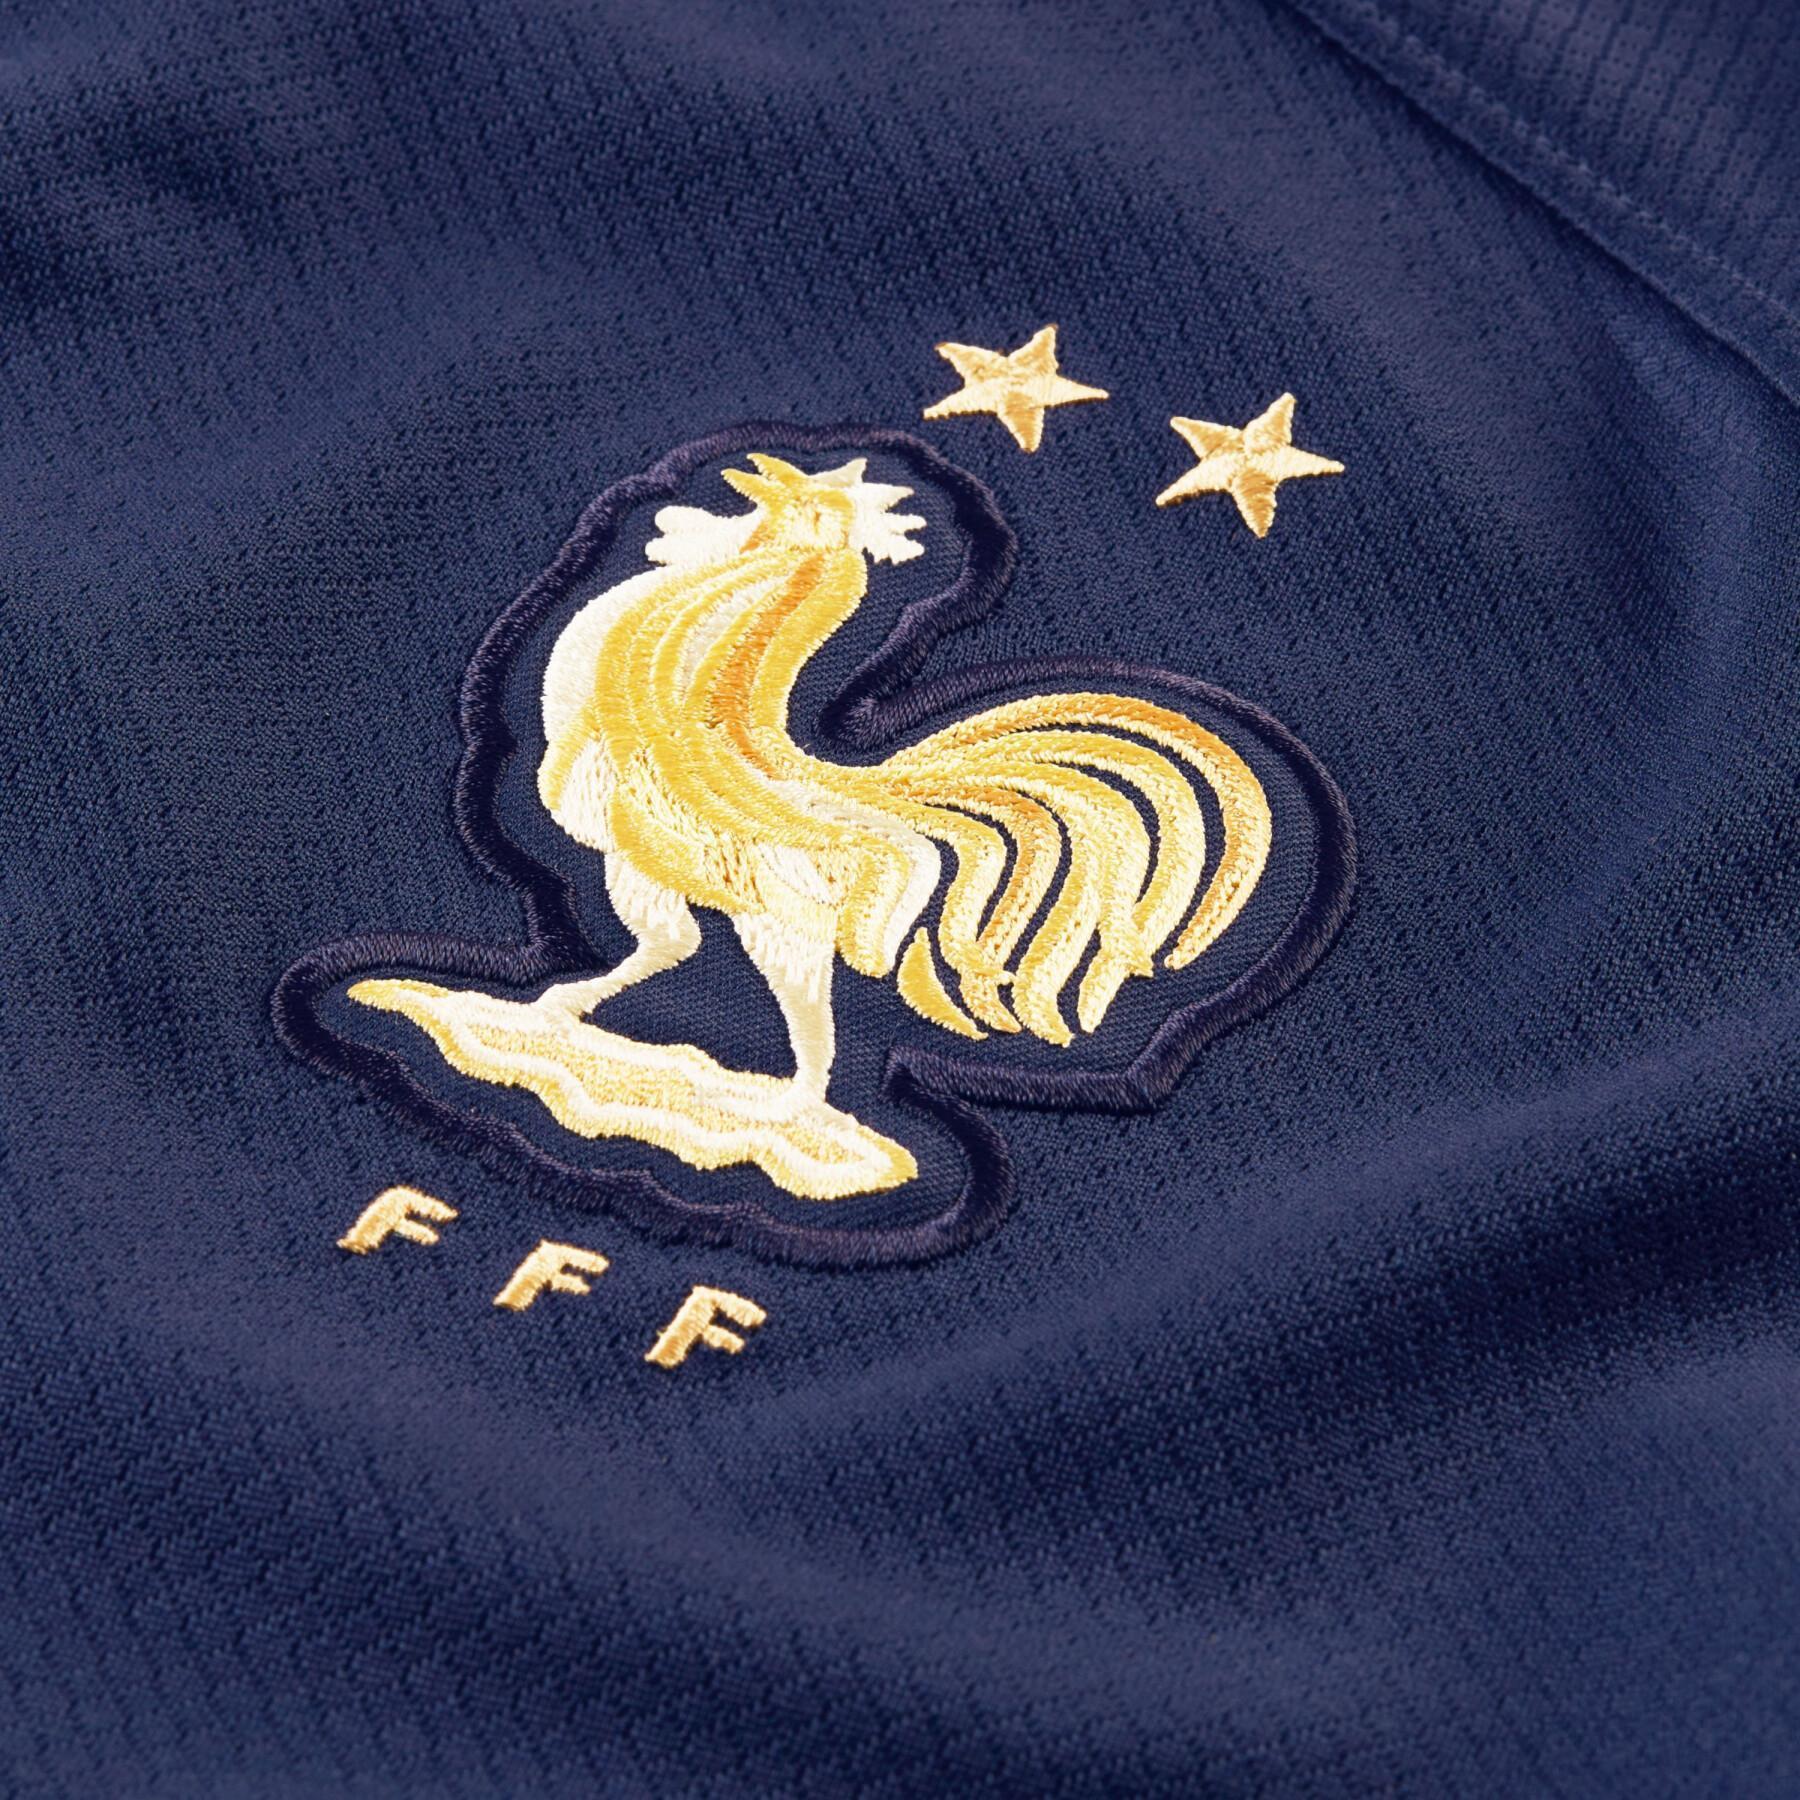 Camiseta local de la Copa Mundial 2022 France